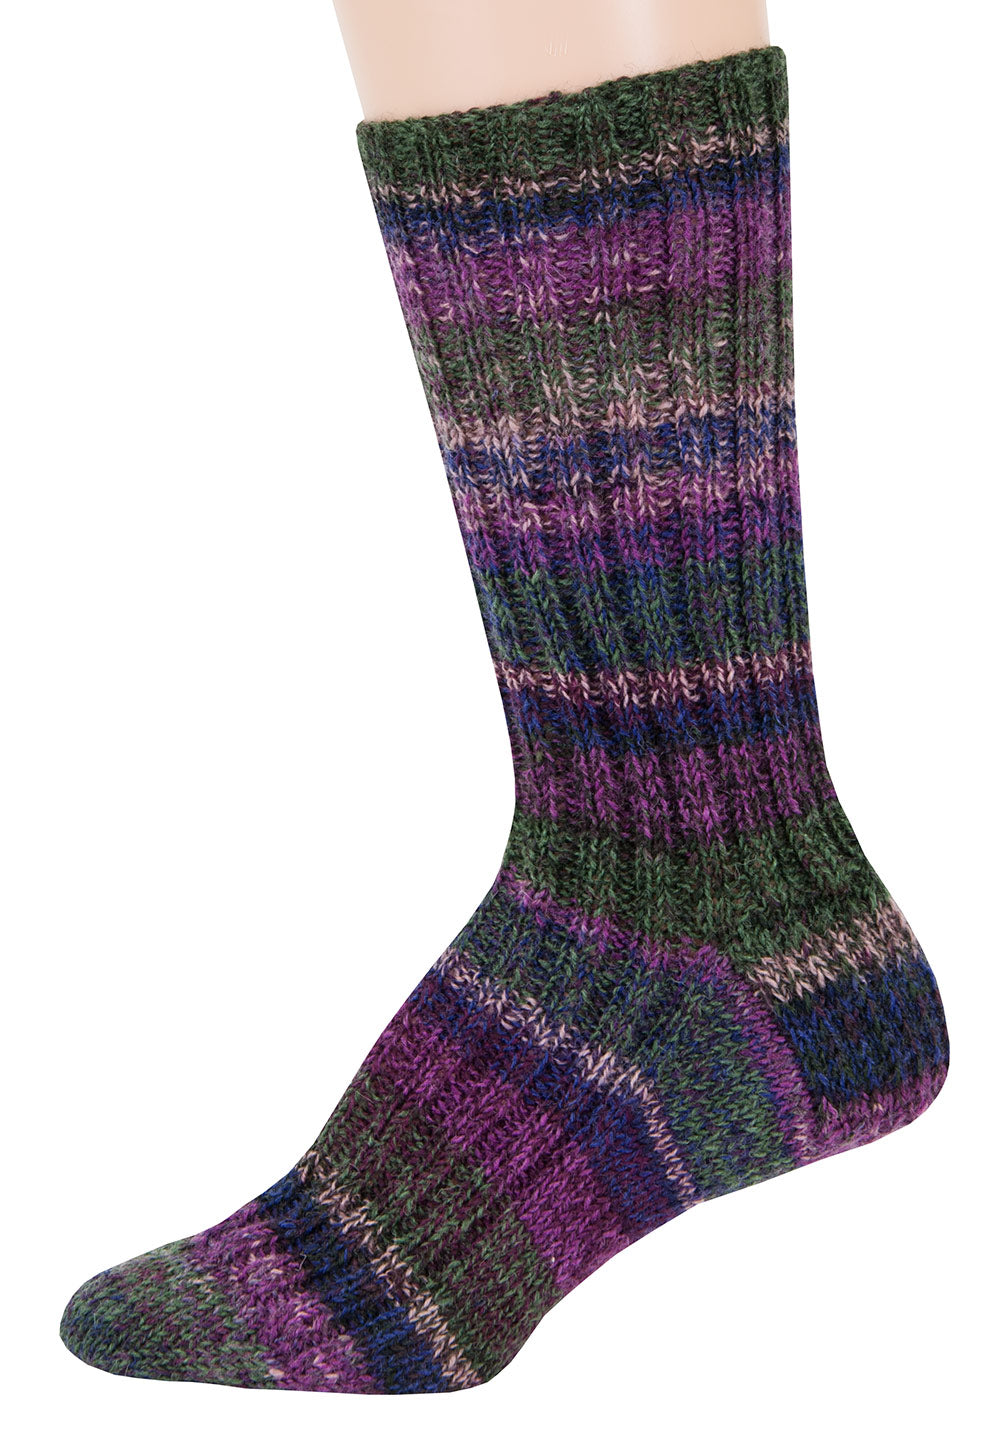 Free Top Down Ribbed Socks Pattern